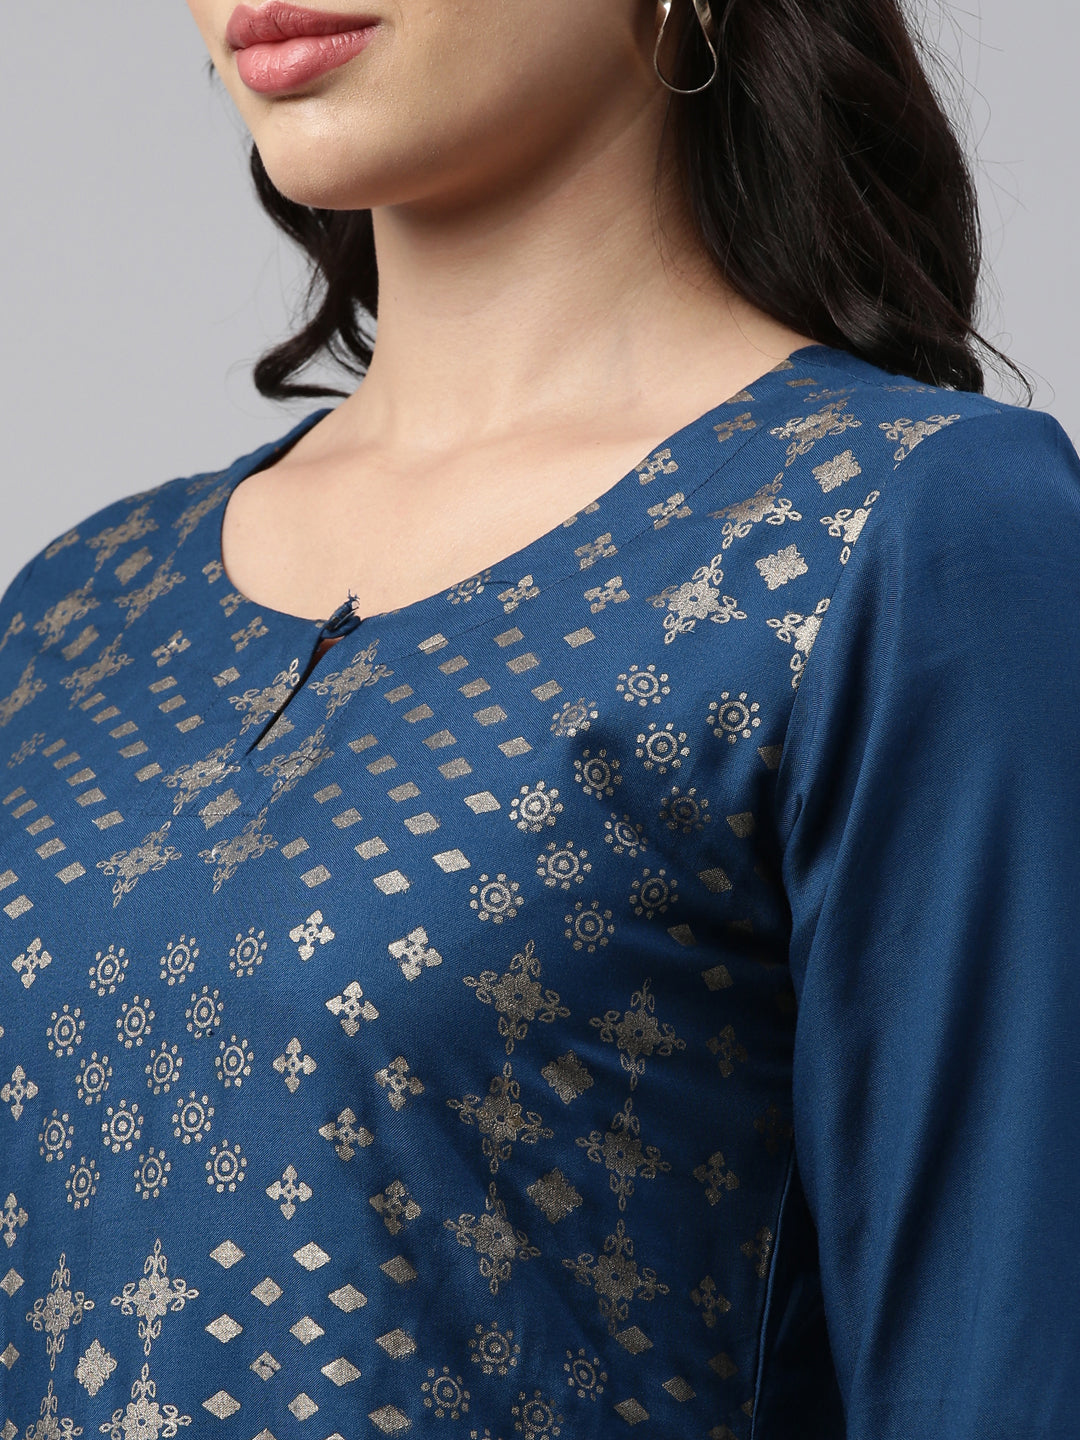 Neeru'S Blue Color, Rayon Fabric Tunic